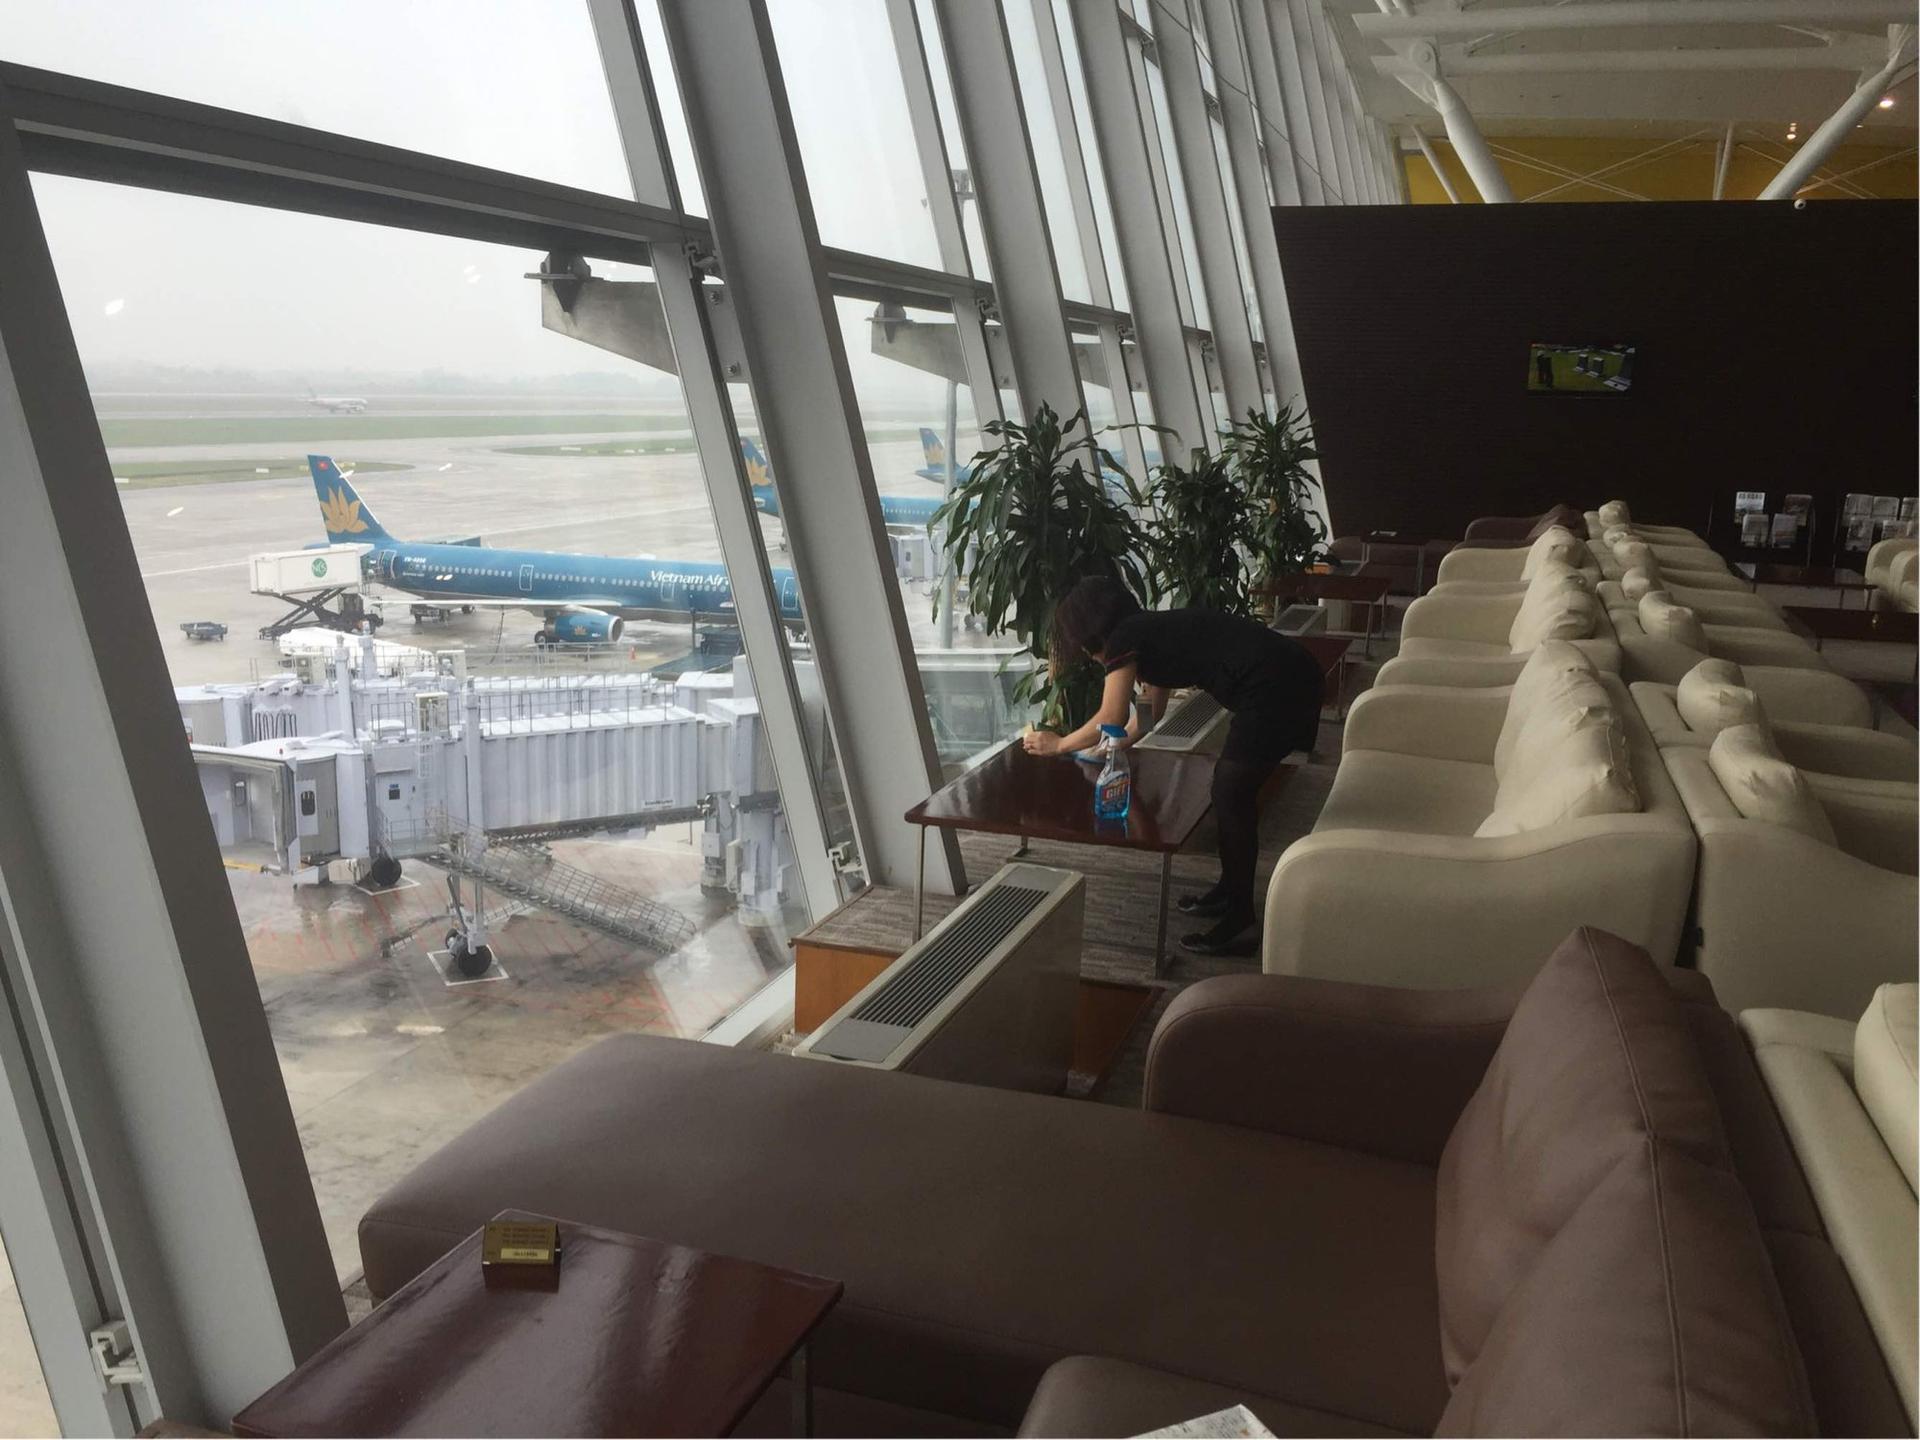 Noi Bai International Airport Business Lounge image 4 of 26